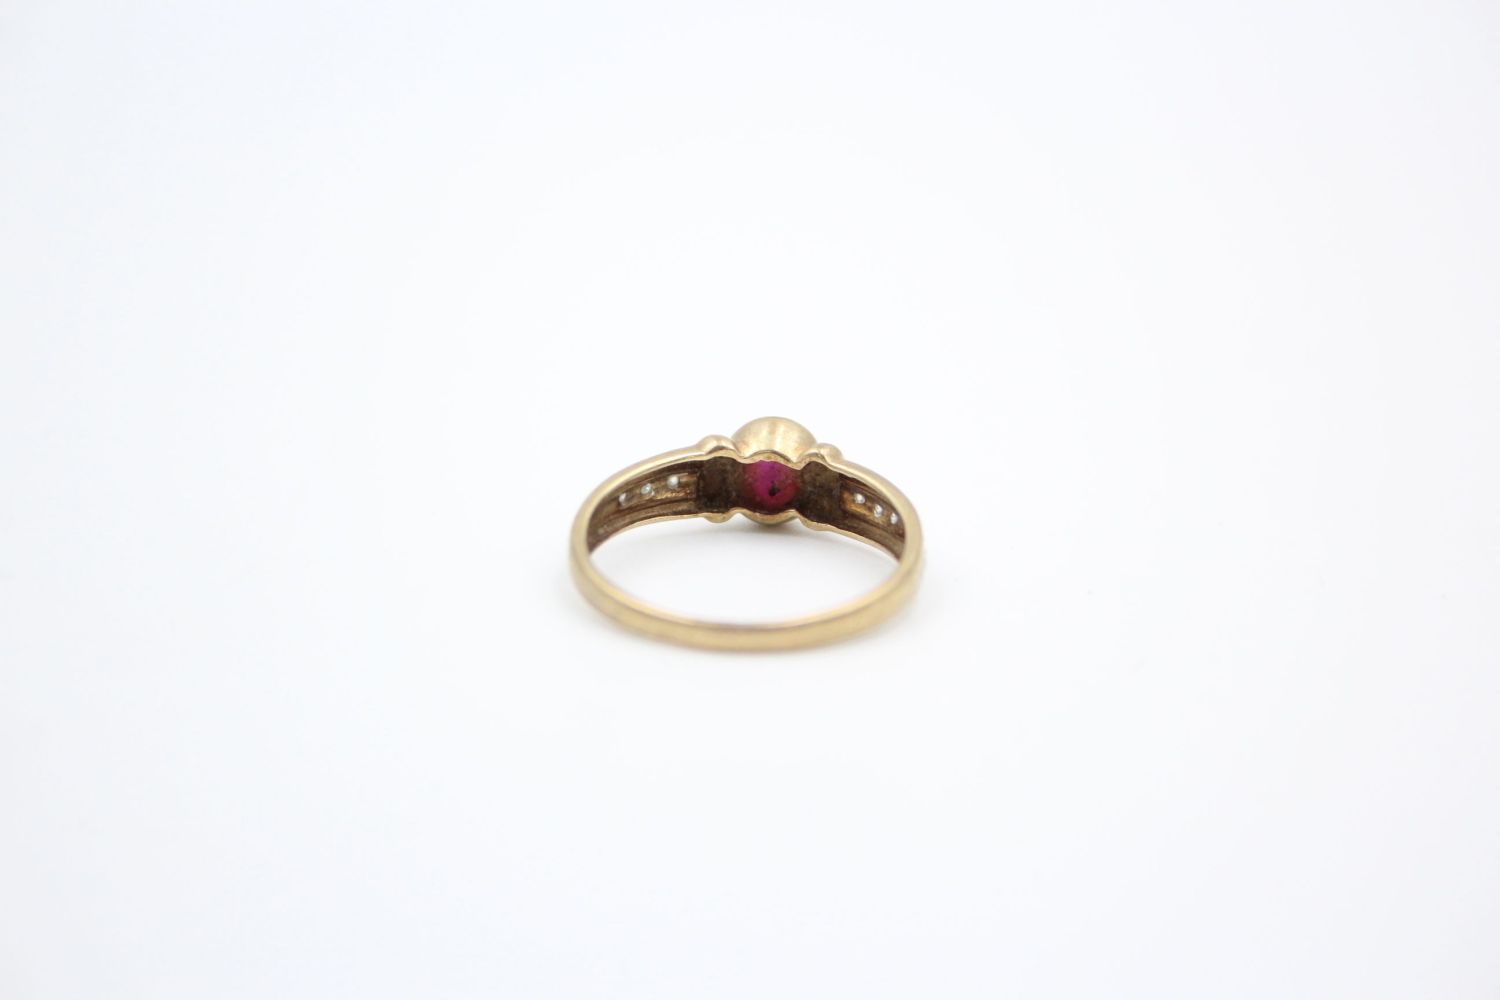 9ct Gold ruby & diamond detail dress ring 2 grams gross - Image 3 of 6